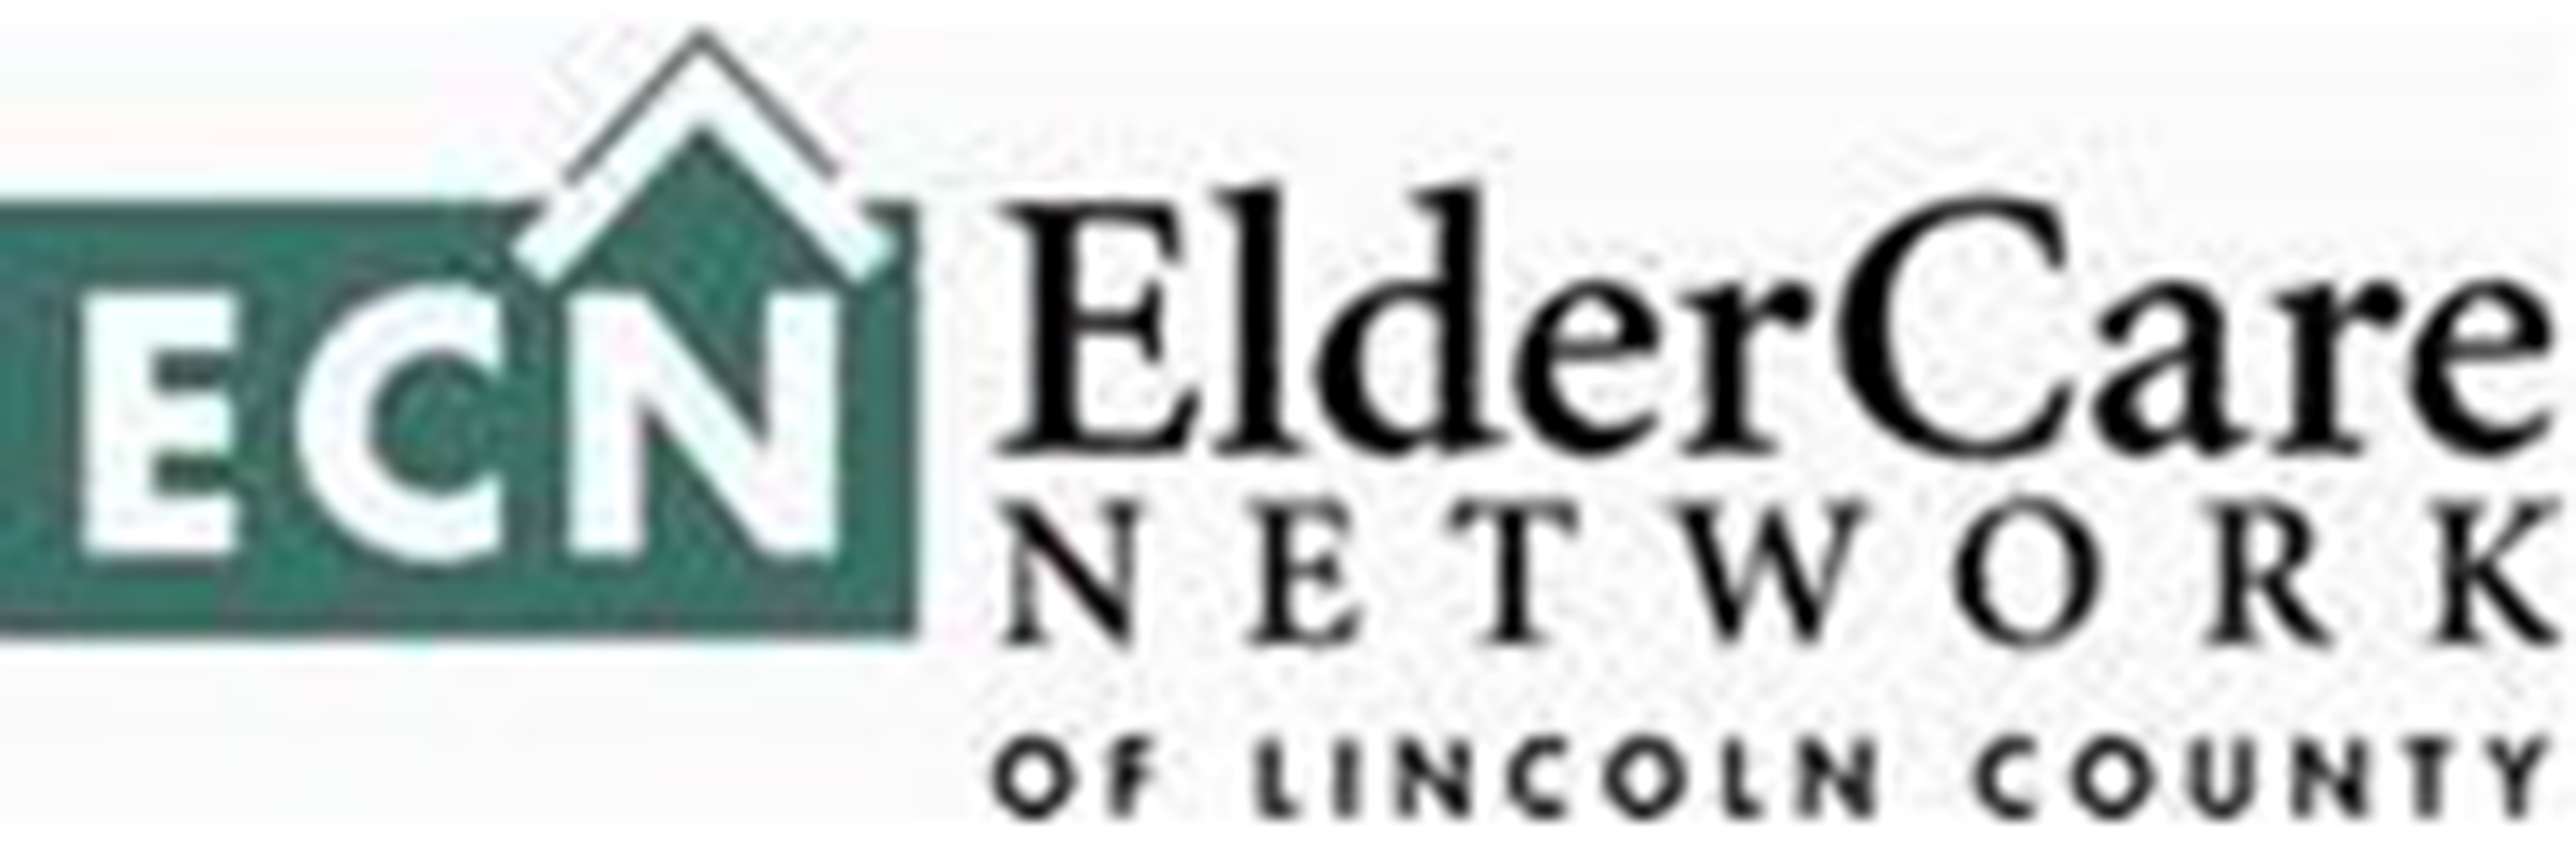 Eldercare Network of Lincoln County